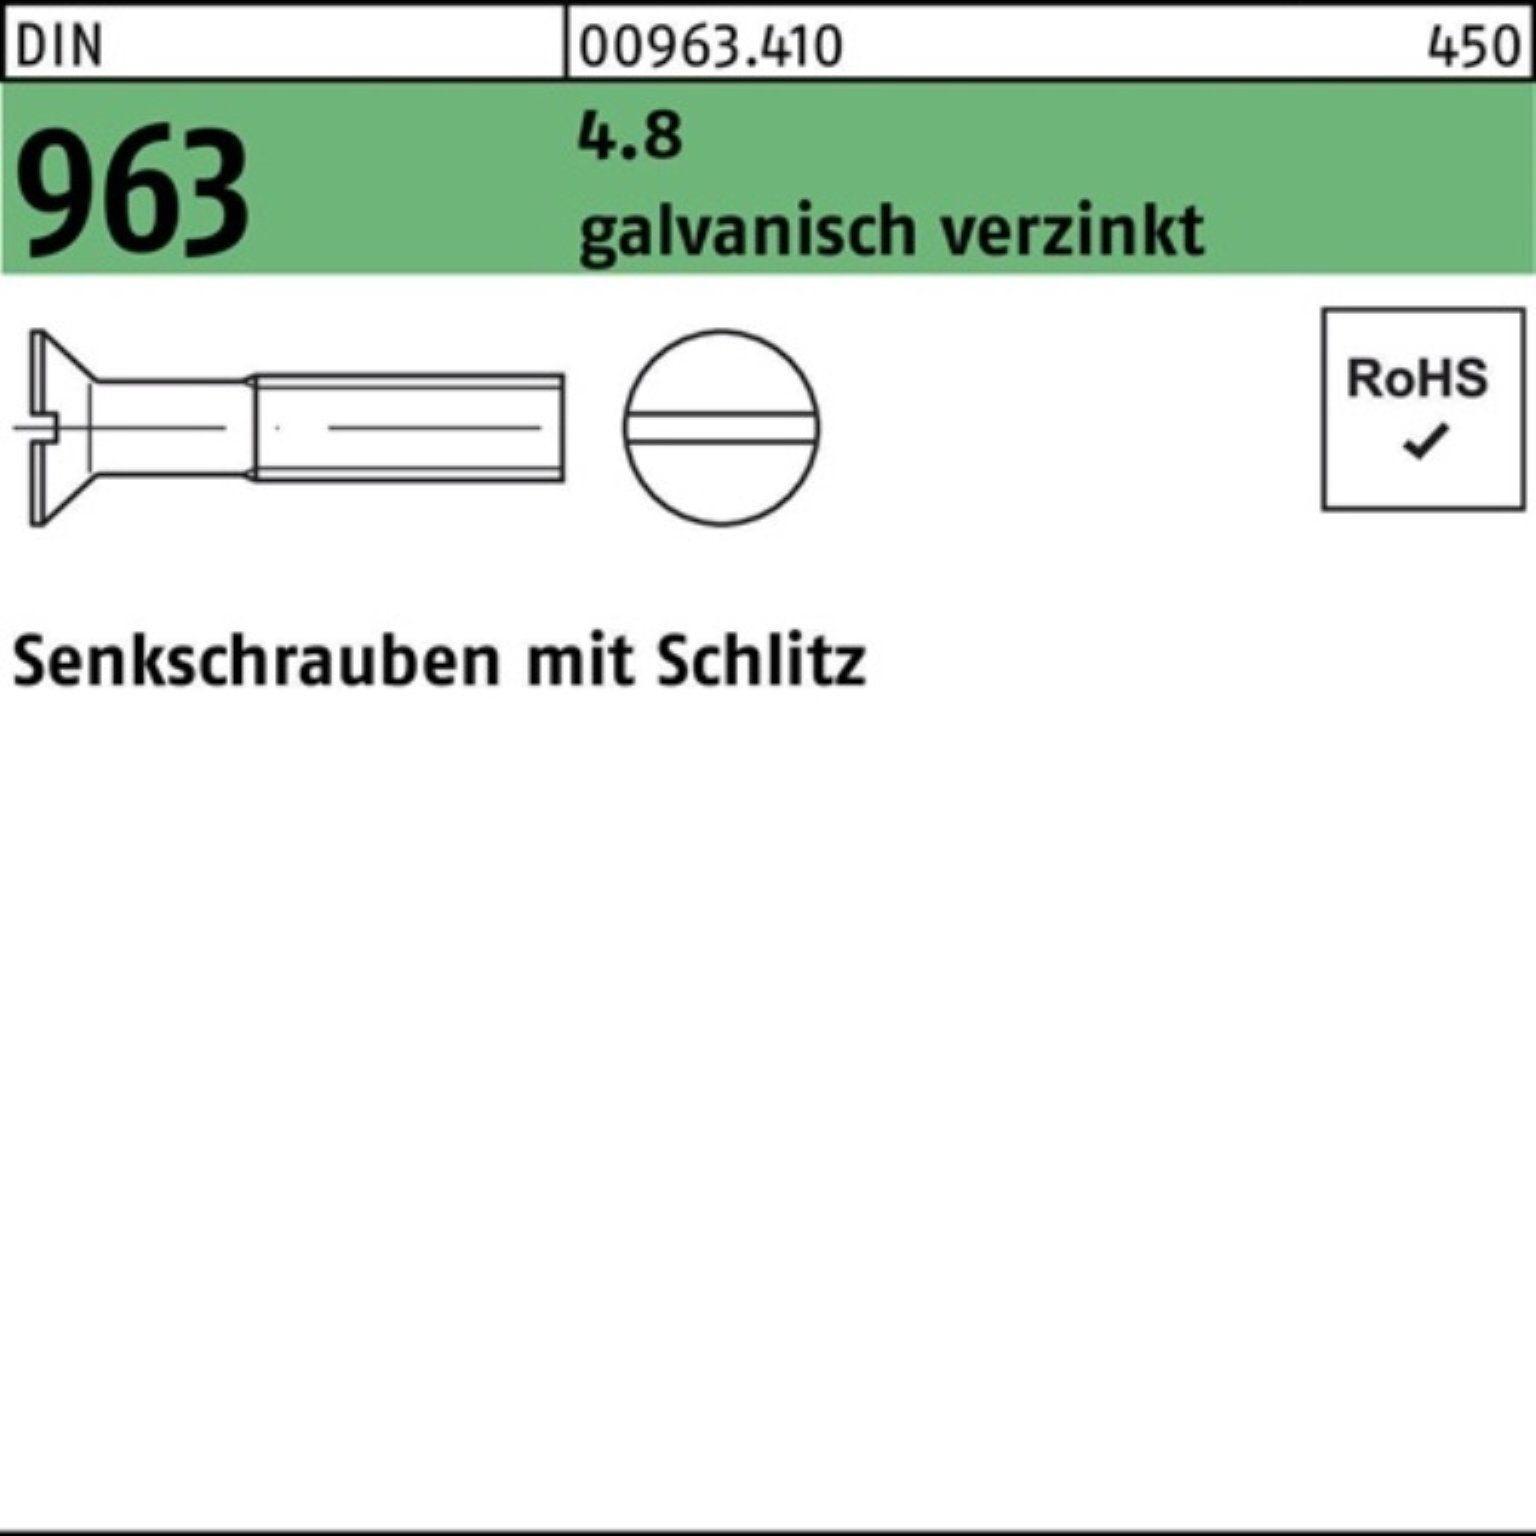 DIN galv.verz. 200 20 4.8 Pack 200er M5x 963 Senkschraube Reyher Senkschraube Schlitz Stü